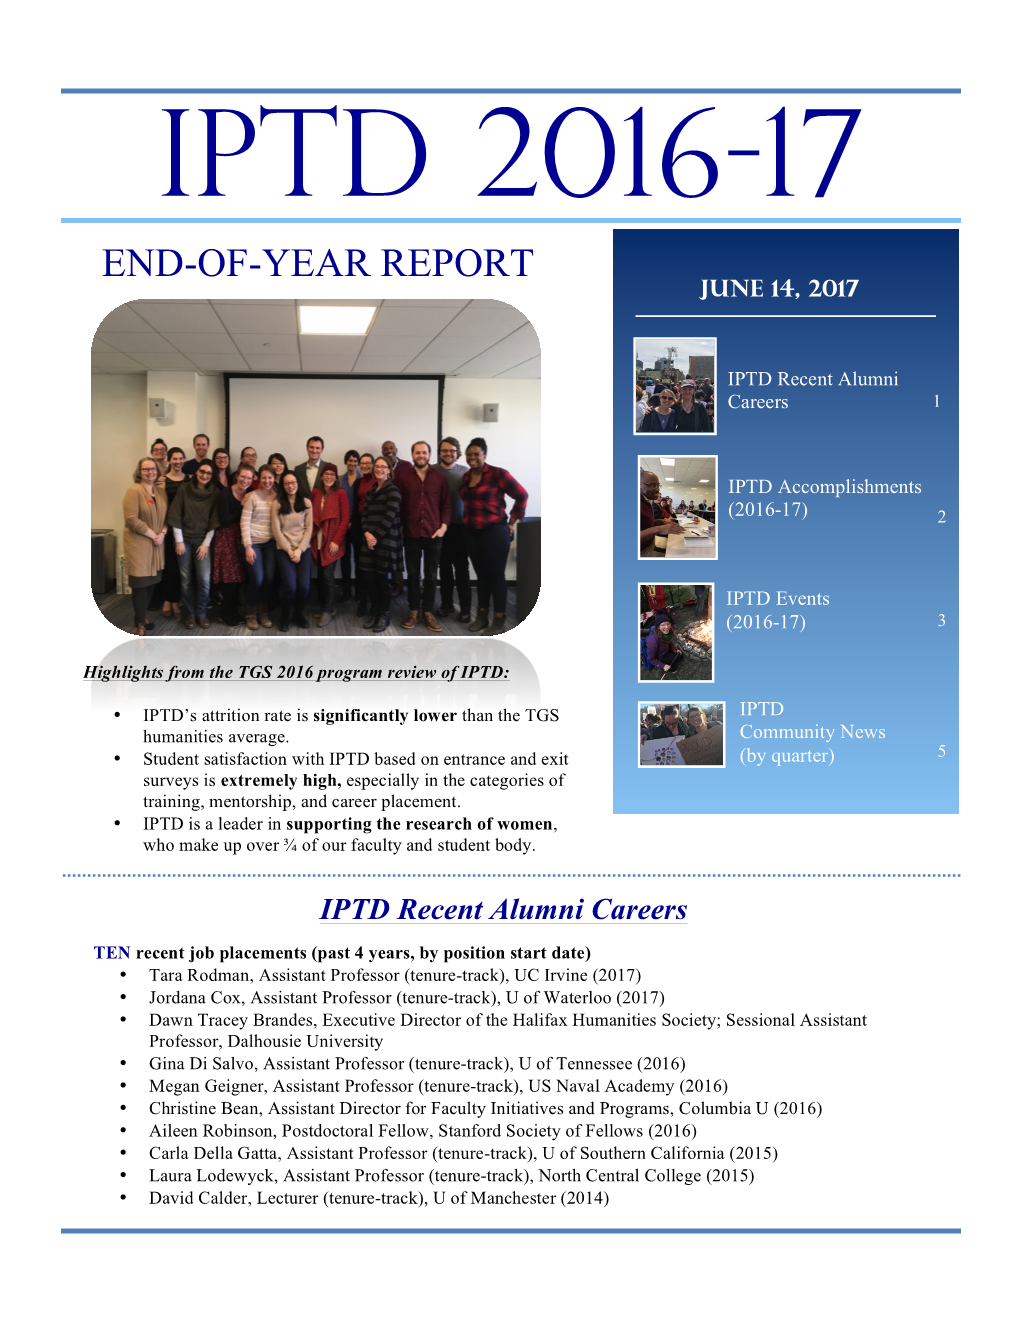 IPTD News, 2016-17